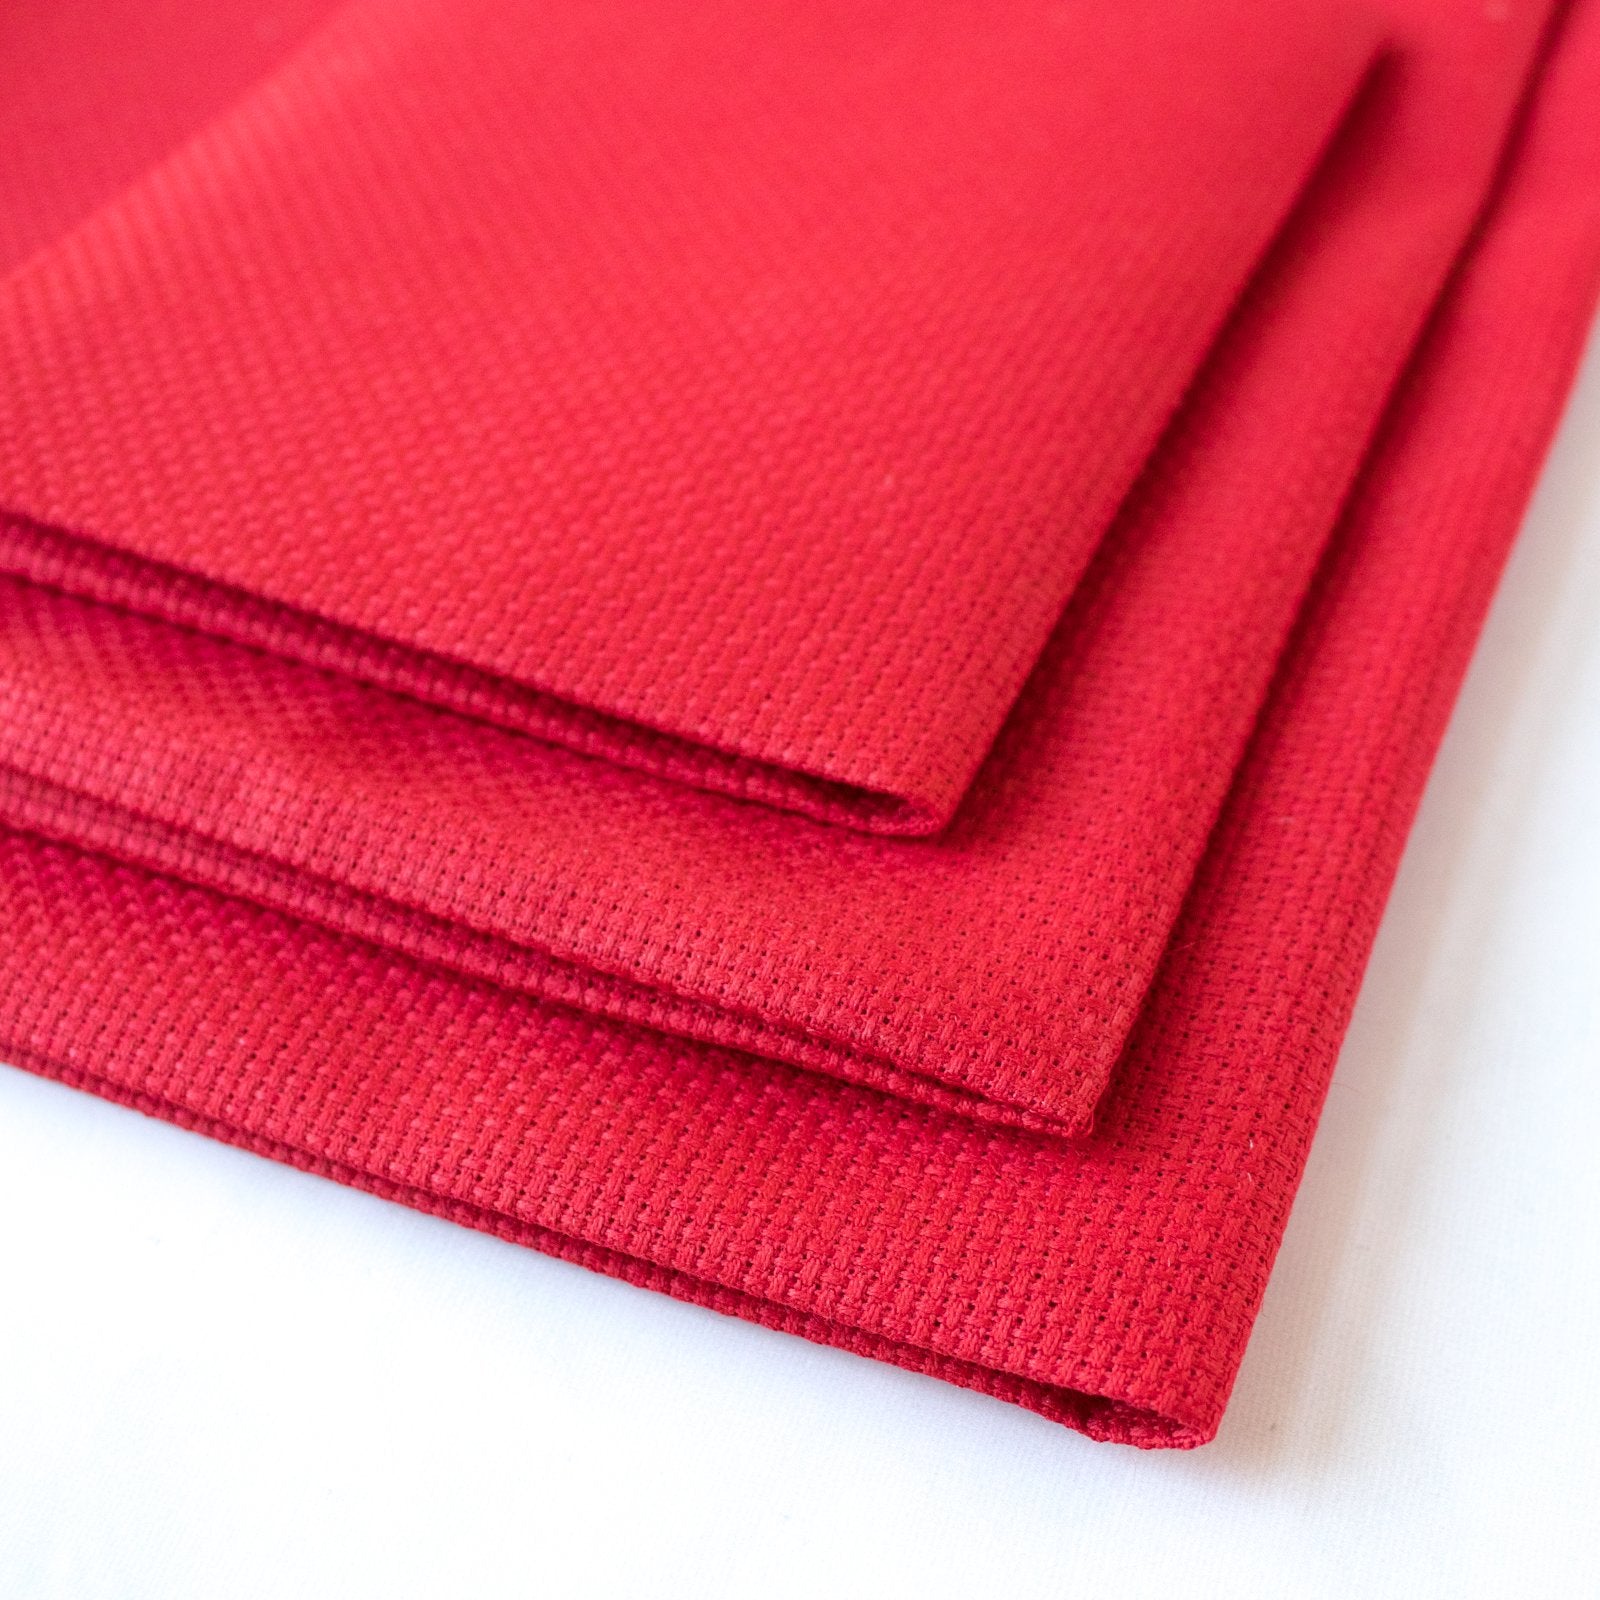 14 Count (14 Ct) 150x50cm Aida Cloth Cross Stitch Fabric White/red/black  Best Quality Free Shipping - Cross-stitch - AliExpress